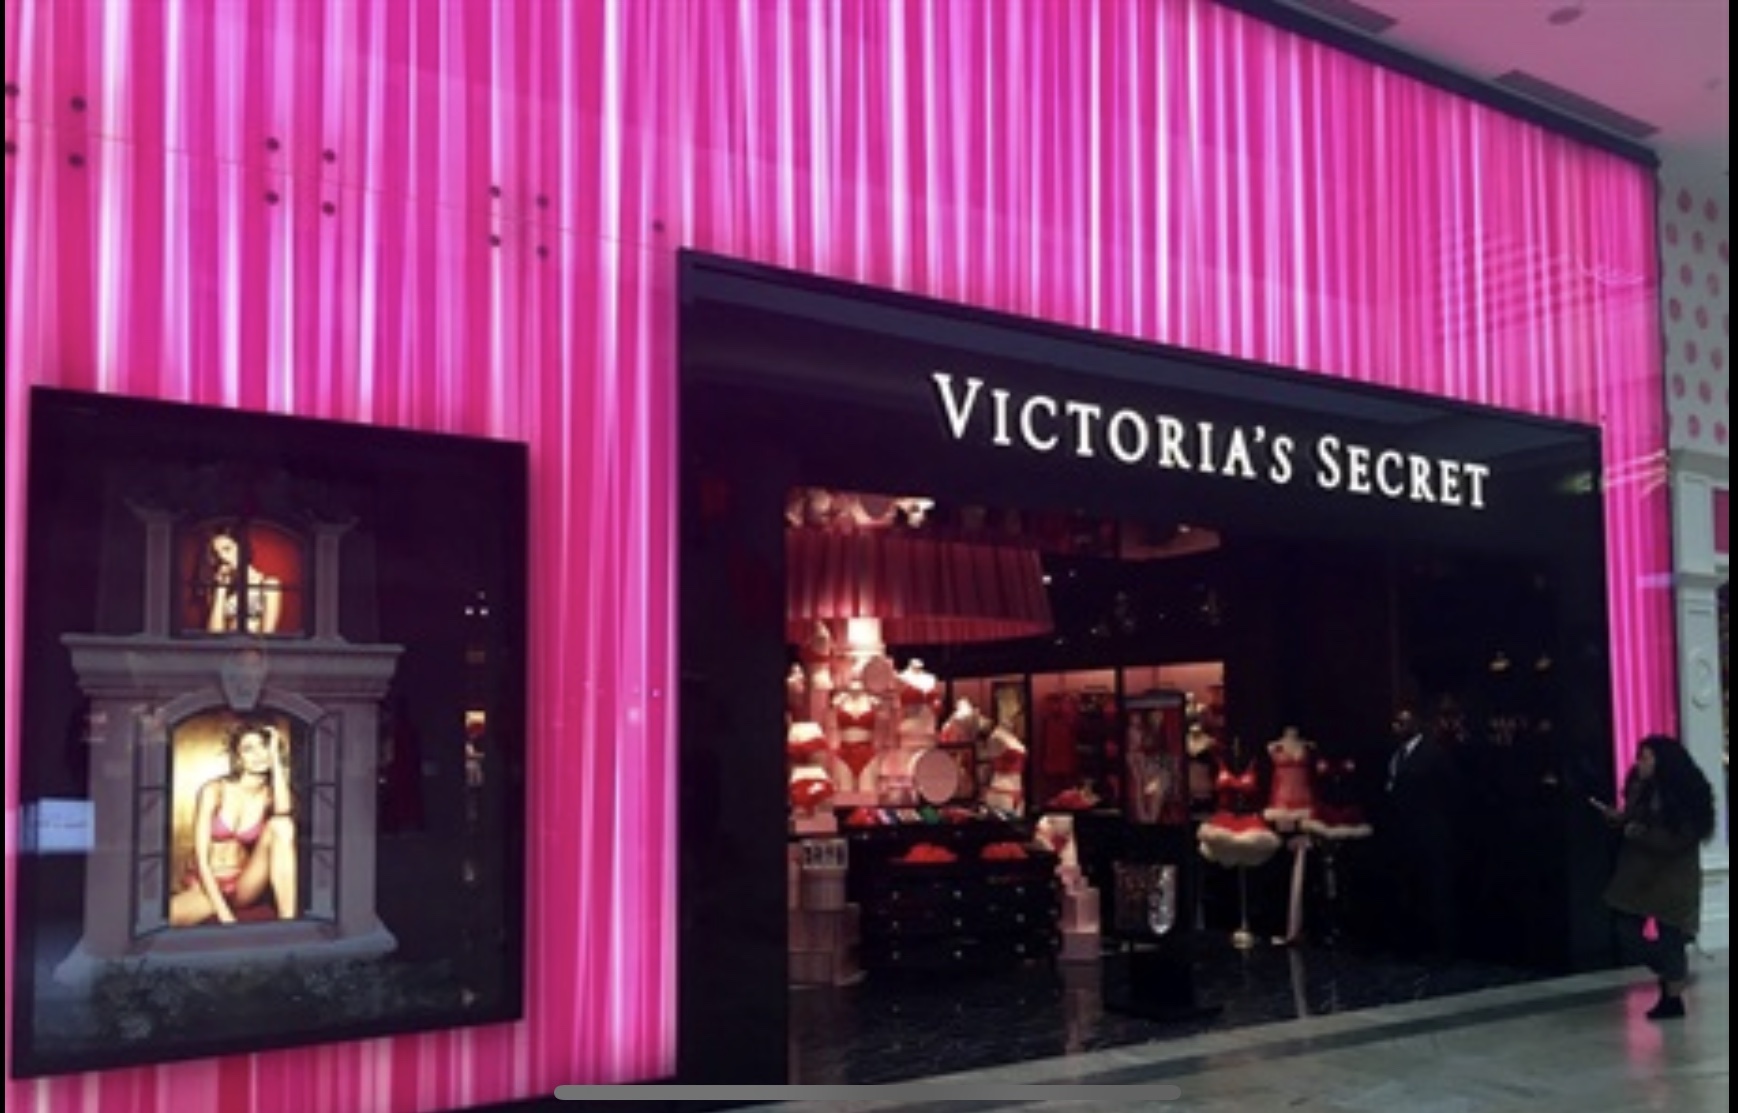 I’ll go to Victoria’s Secret and…